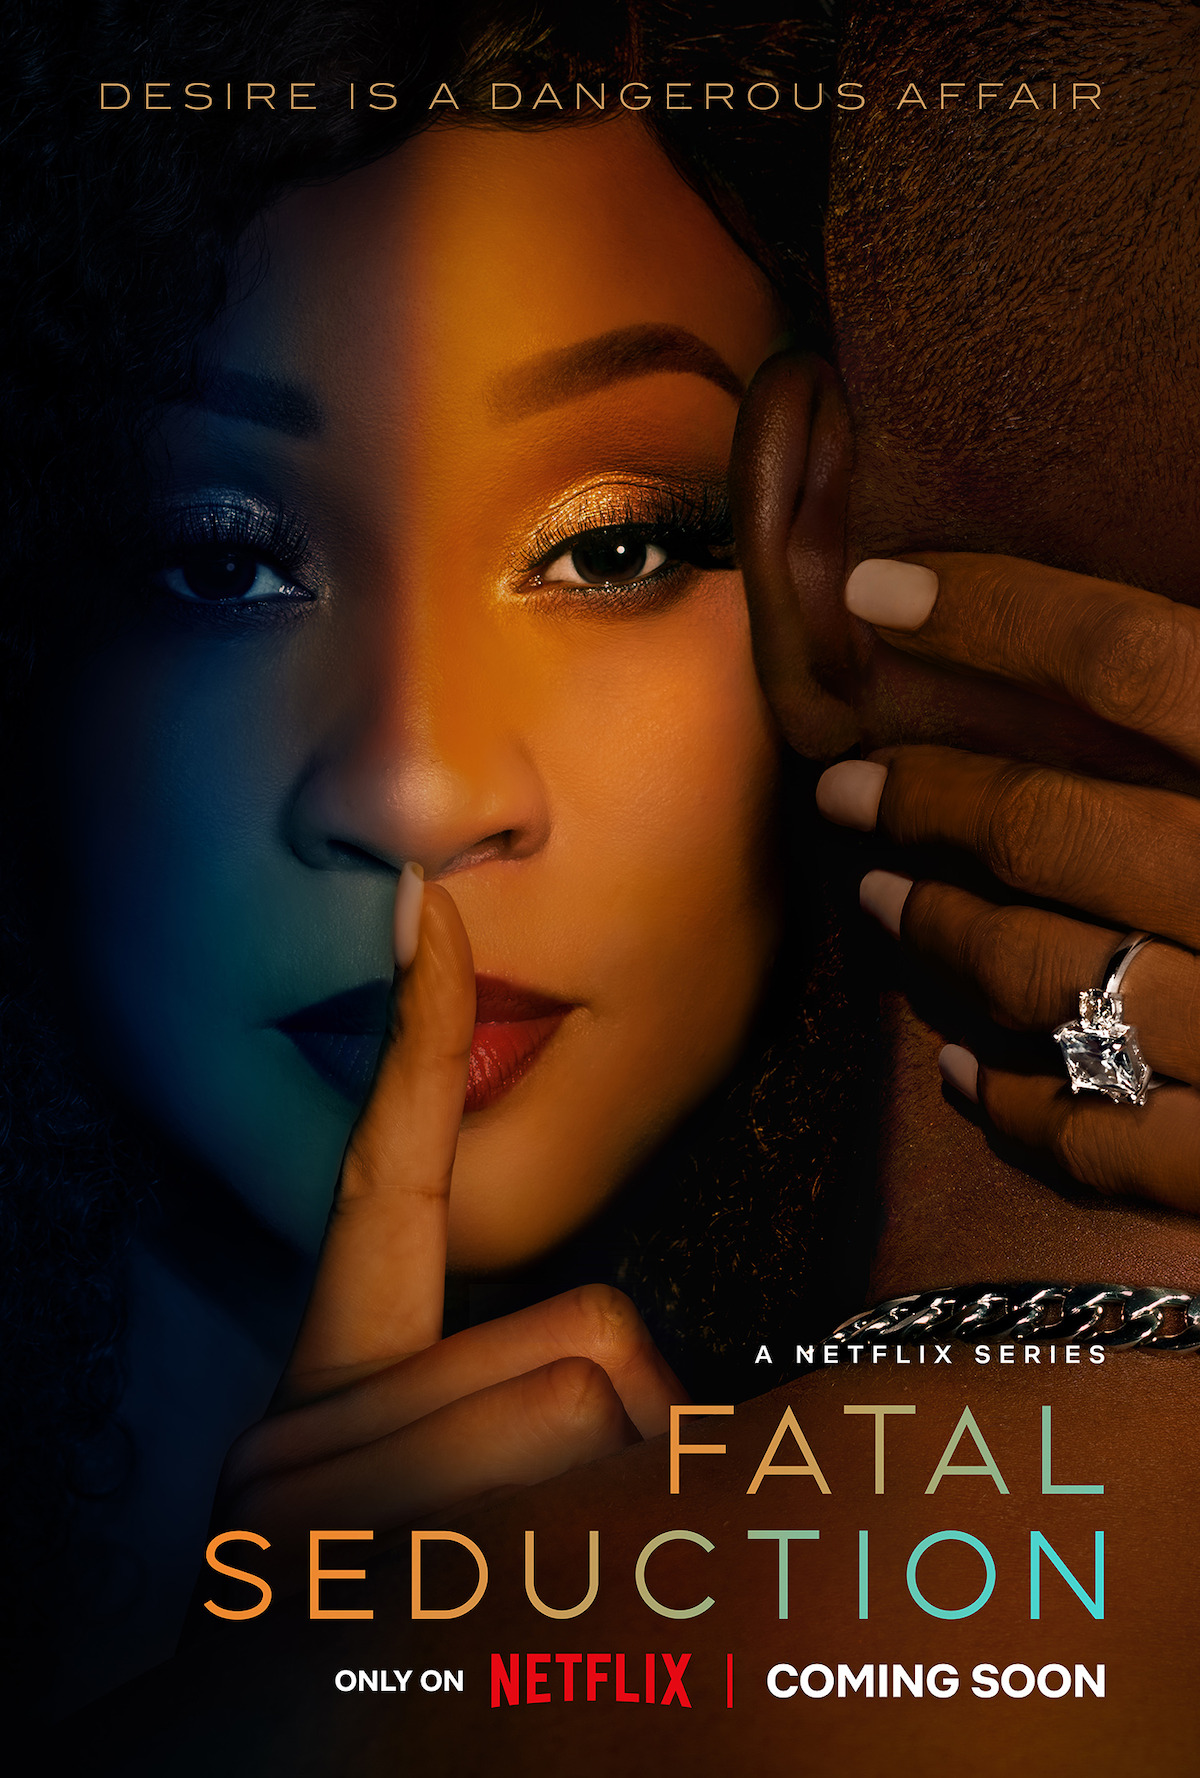 Fatal Seduction Cast, Plot, Release Date and Trailer